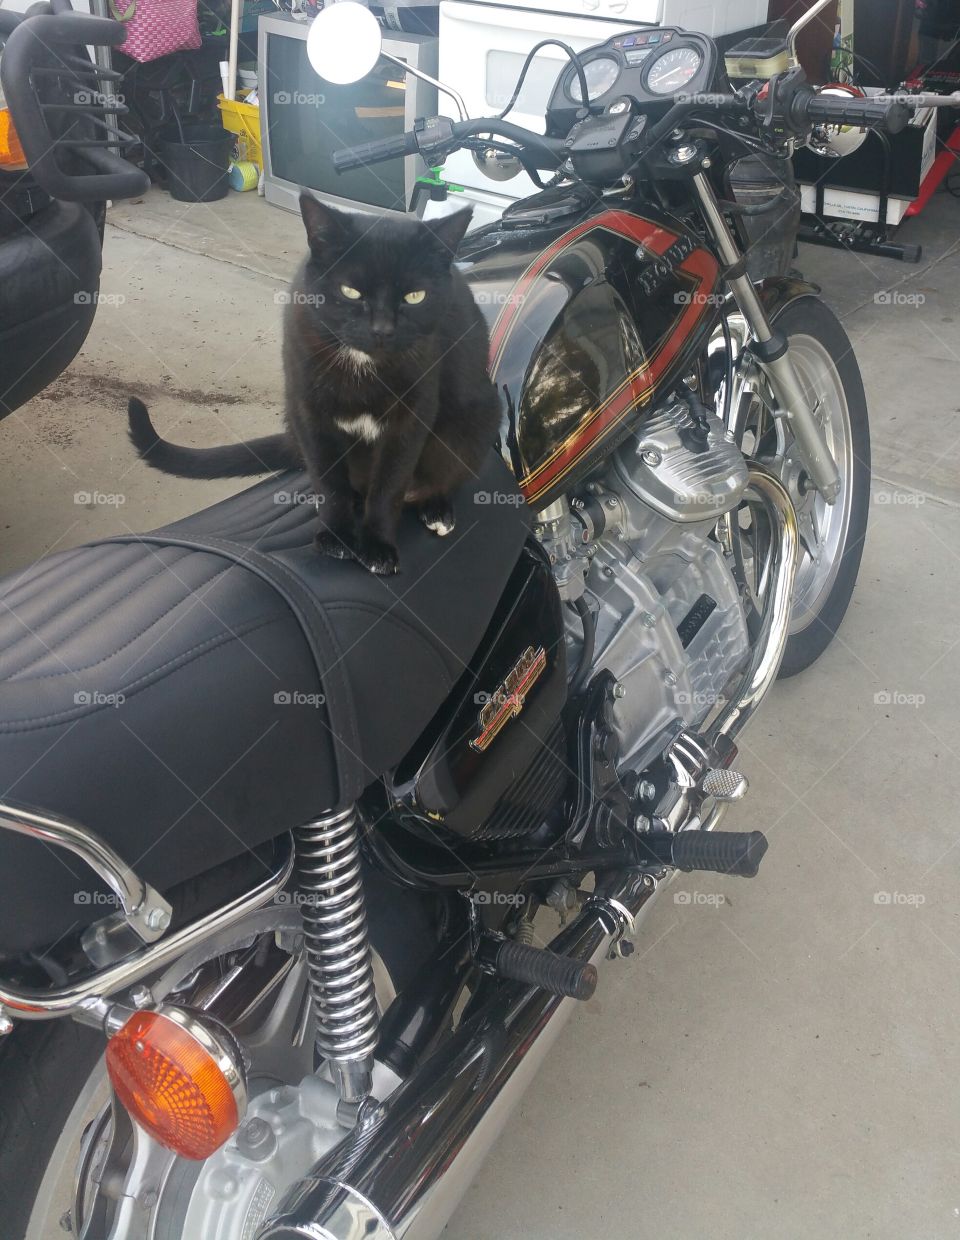 garage cat on motorcycle